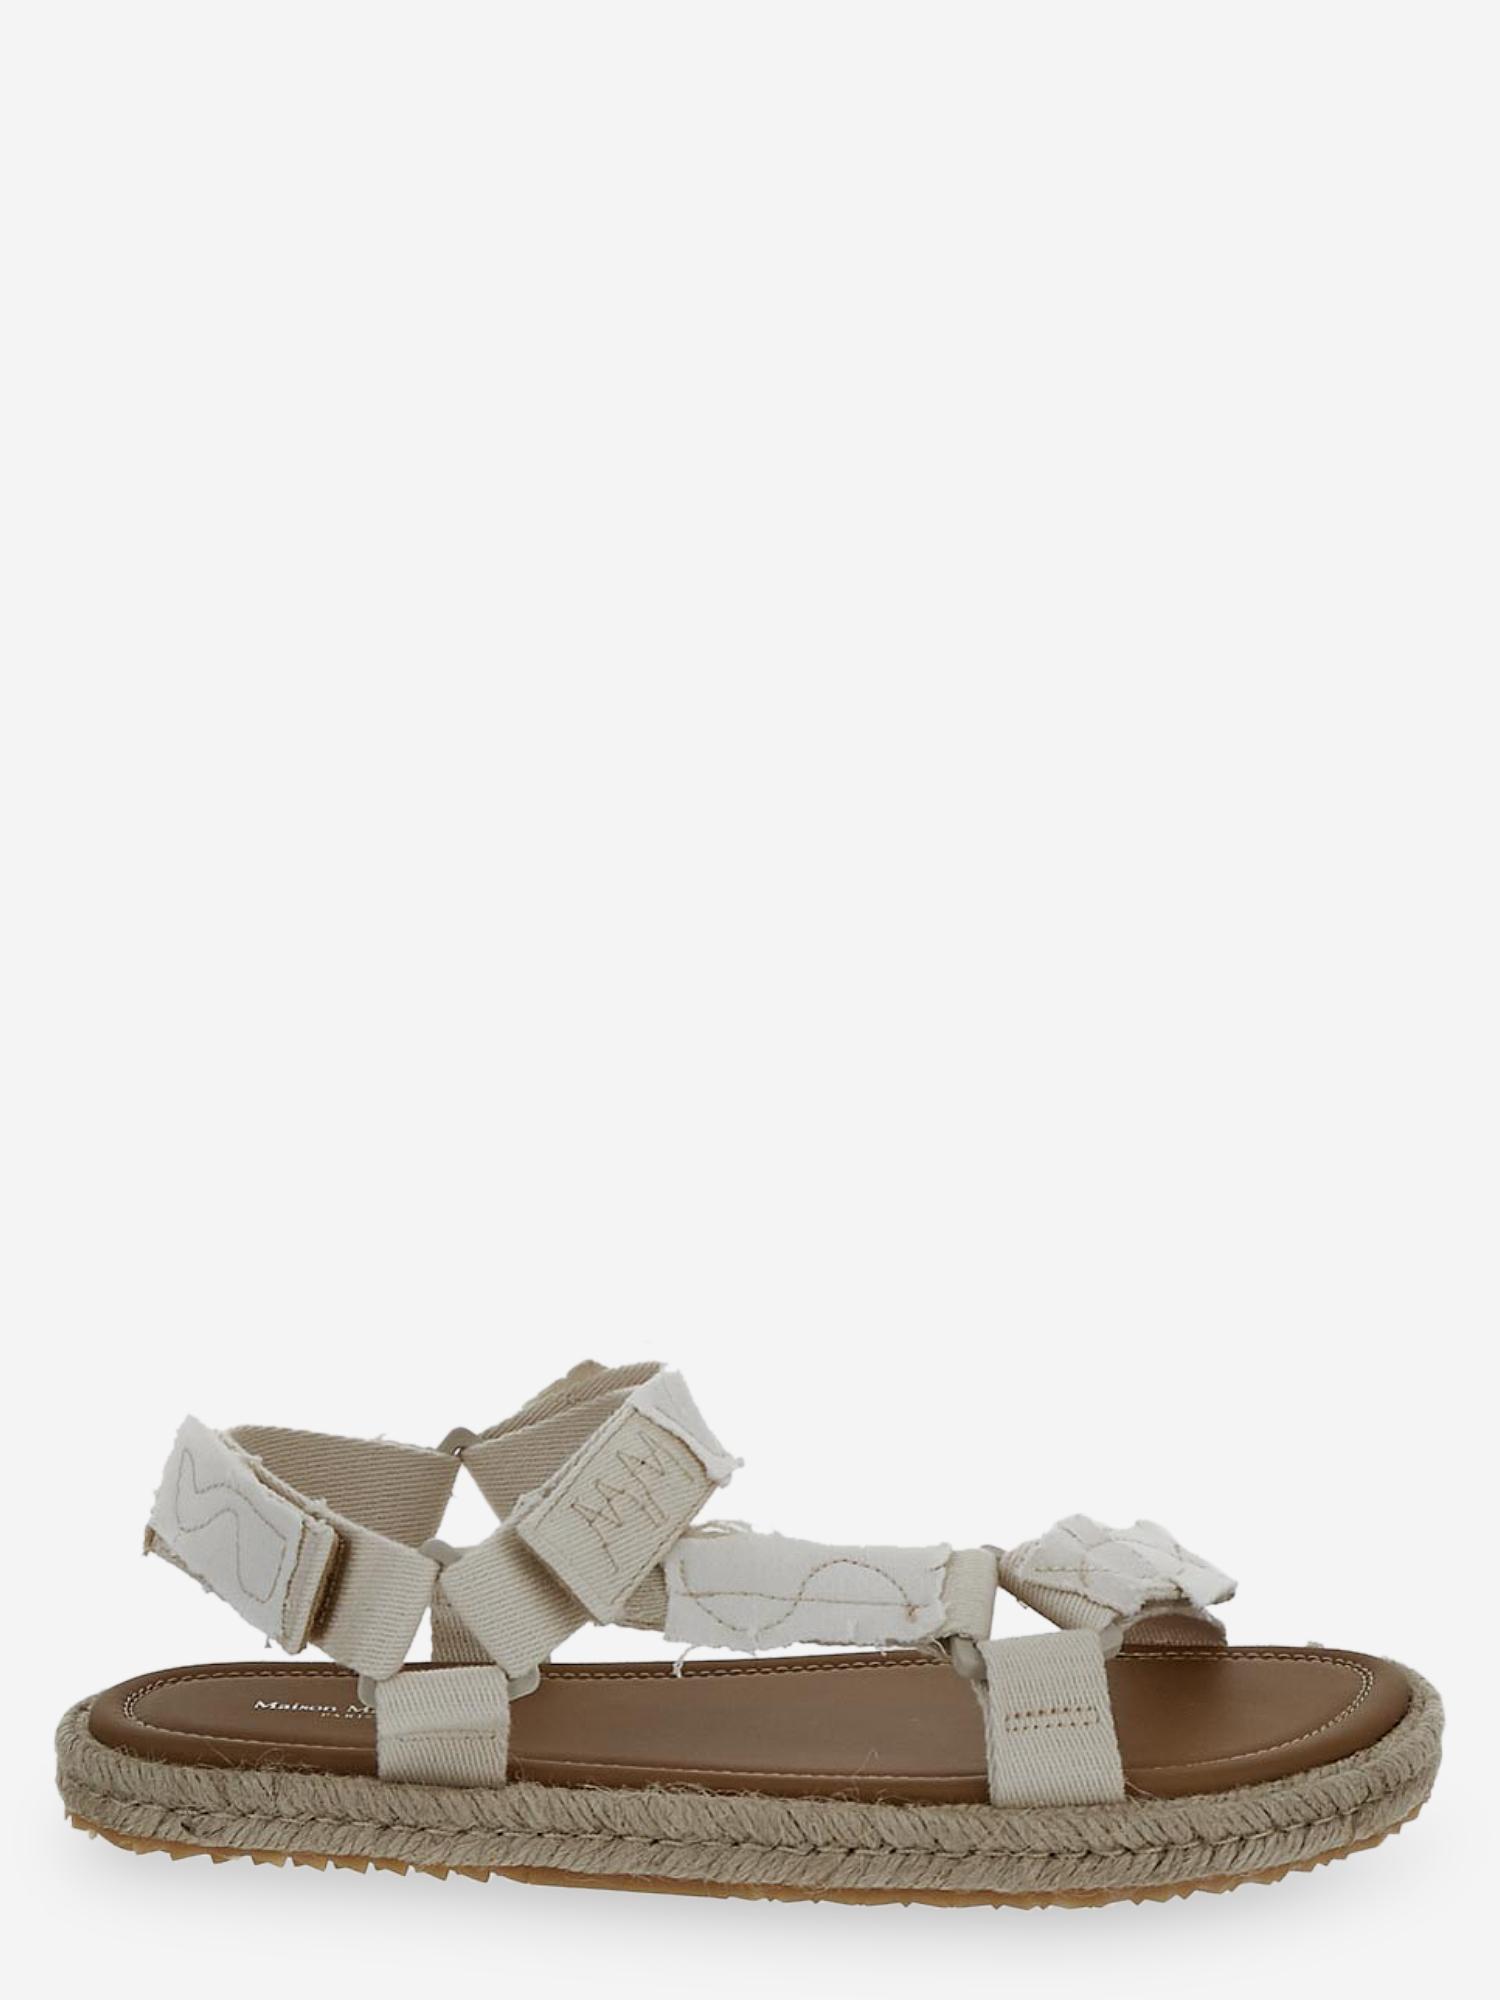 Maison Margiela Sandals in White | Lyst